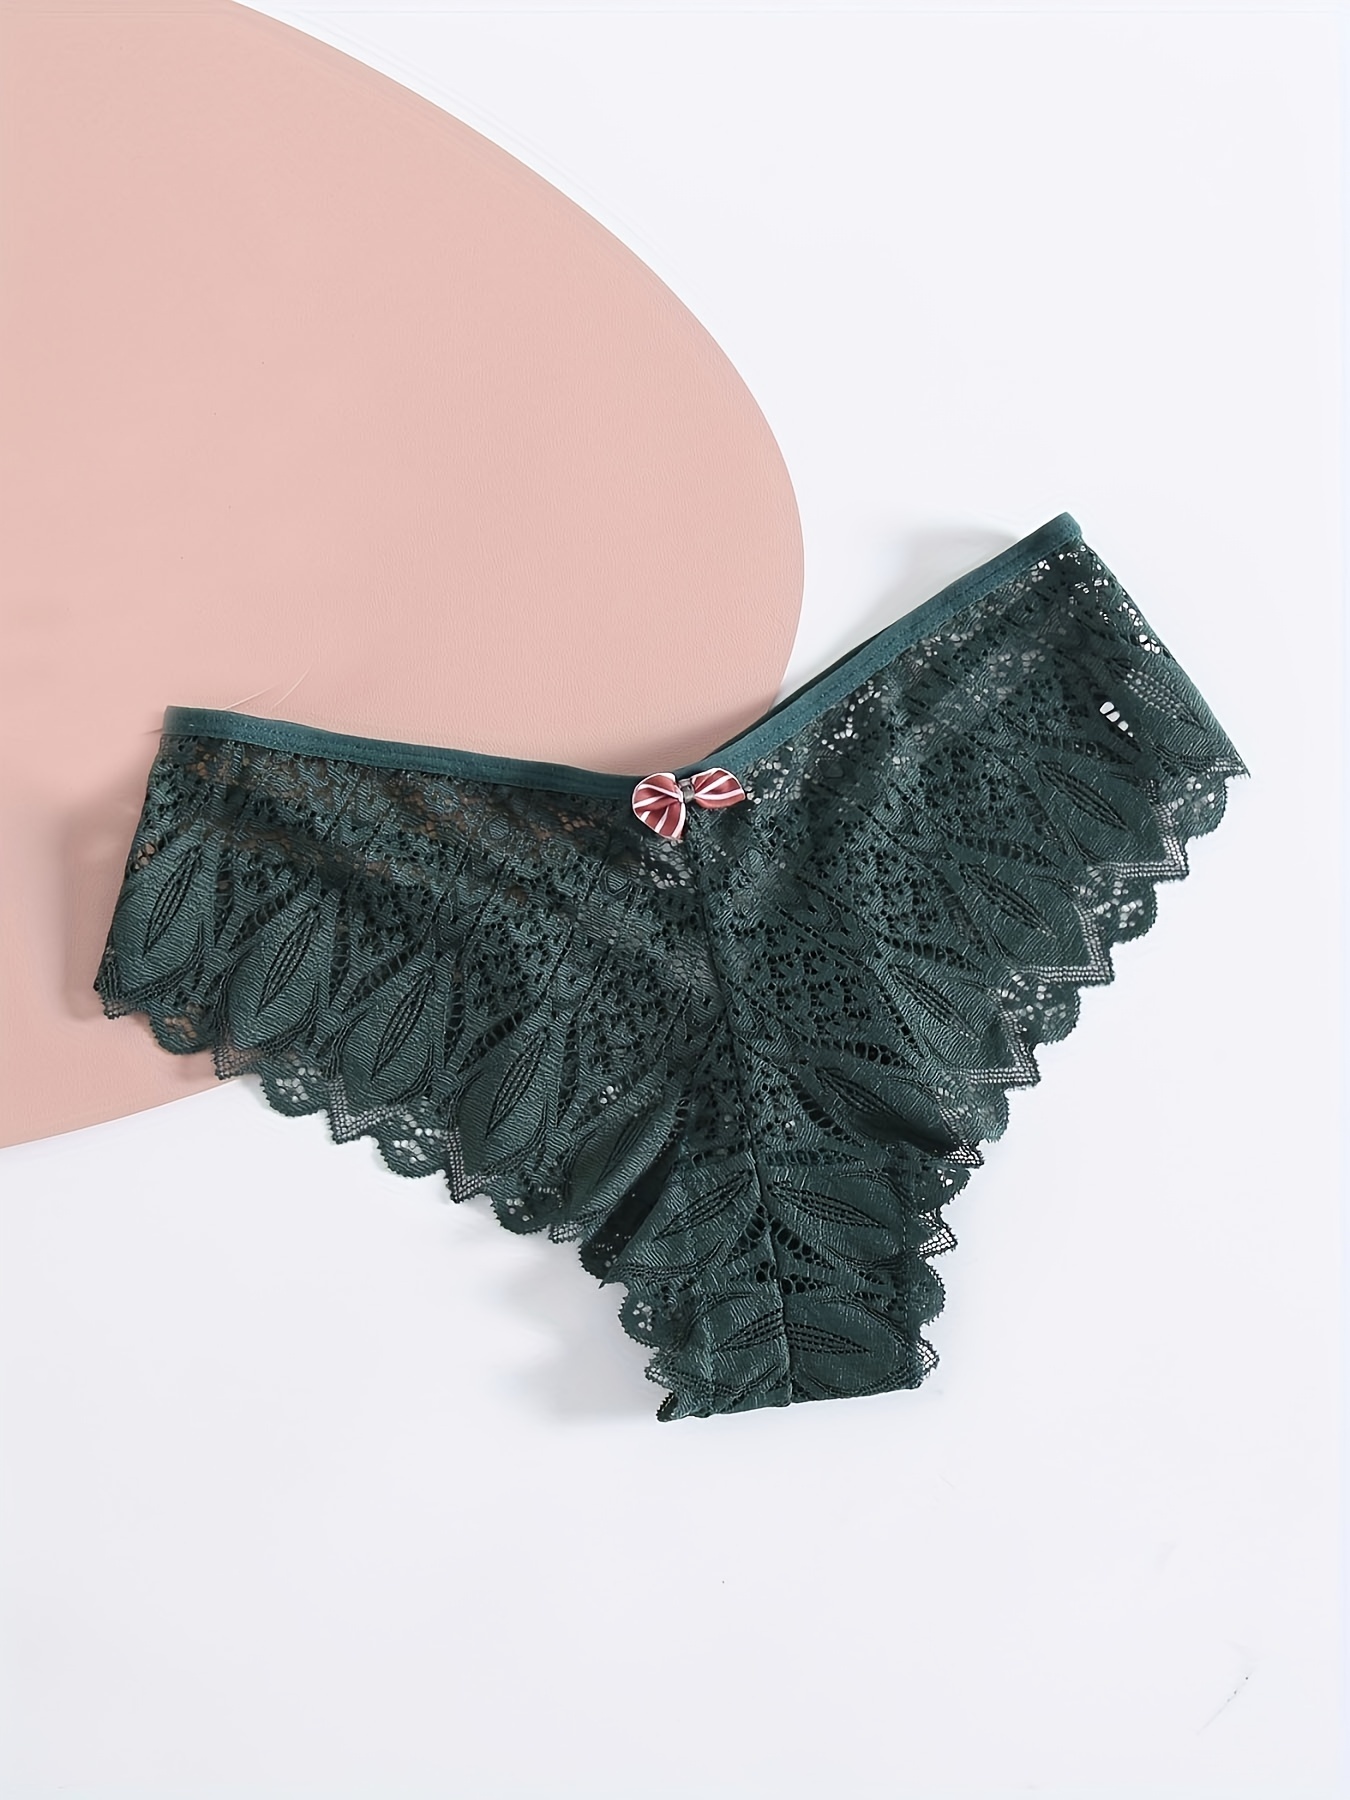 Sensible Spend Eclectic underwear - New Colour Available, louis